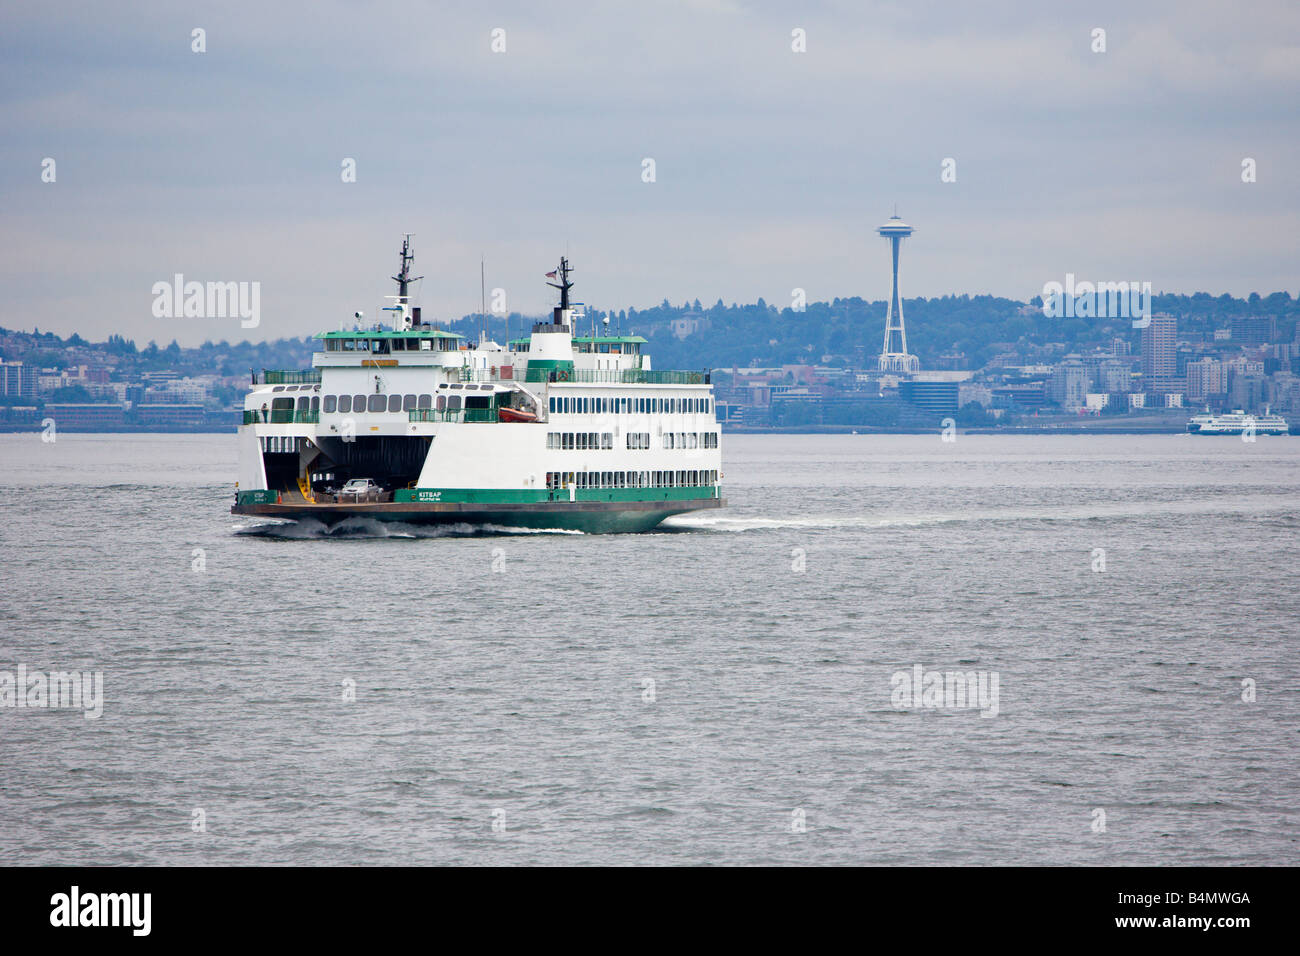 Car ferry in Elliot Bay off the coast of Seattle Washington Stock Photo